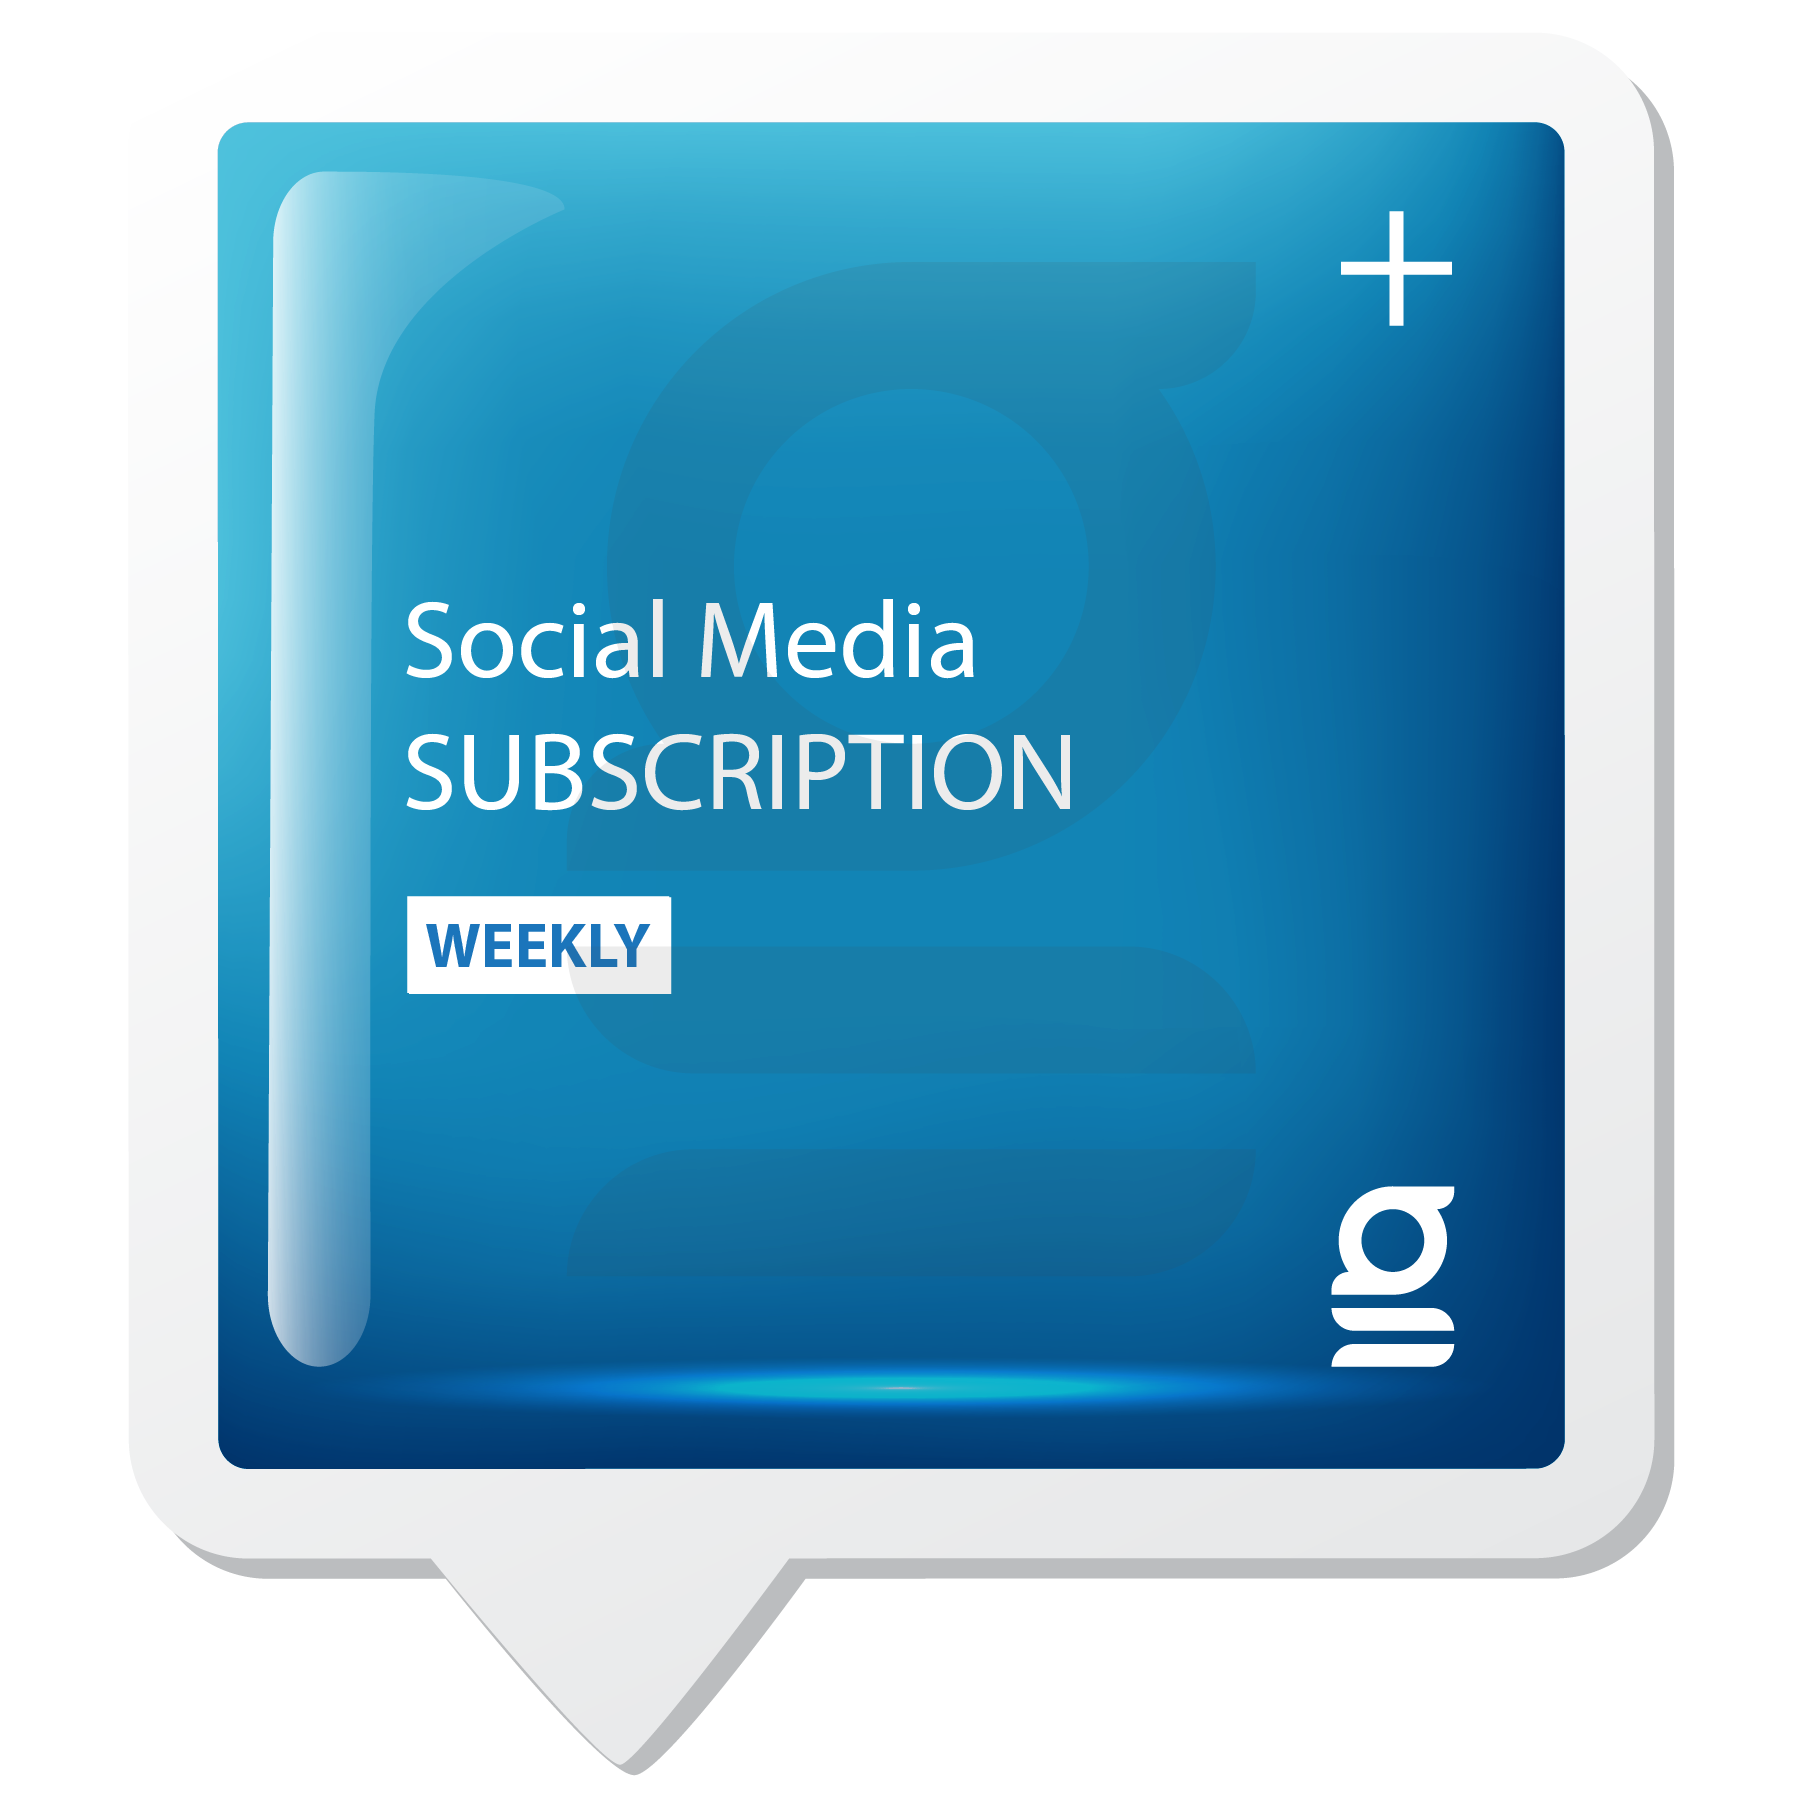 Social Media Weekly Subscription - gettygraphics studio